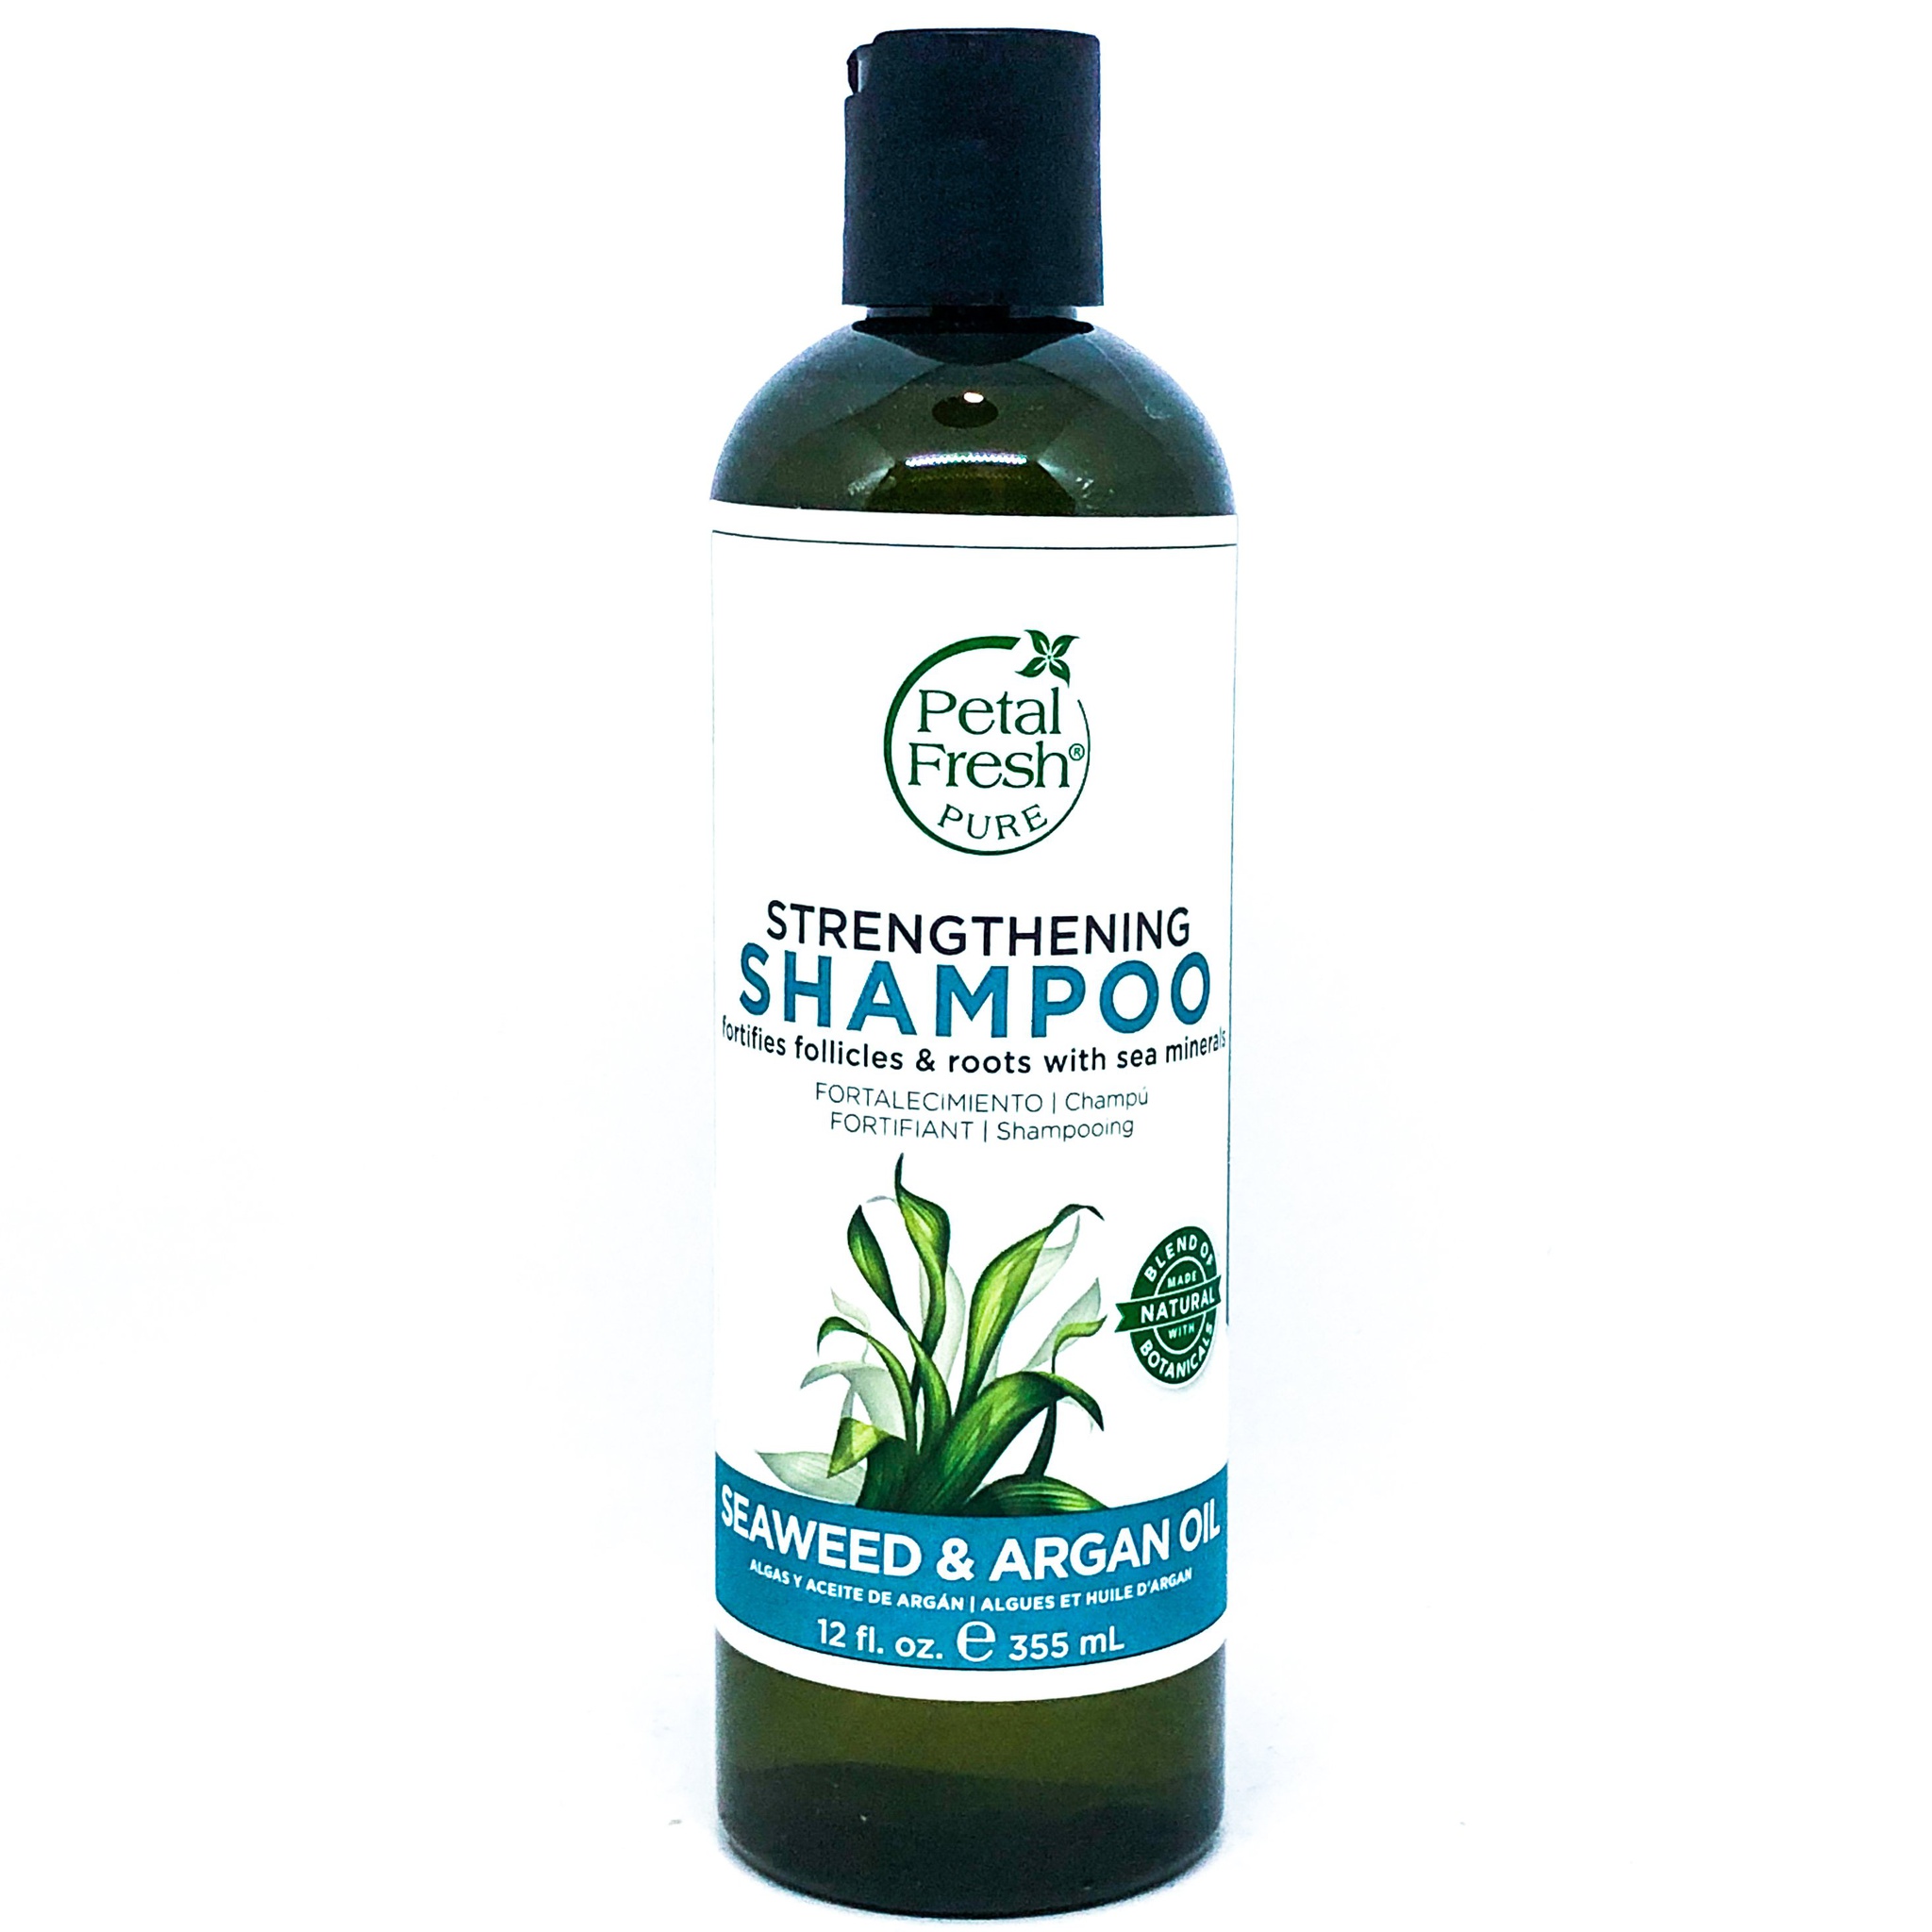 Petal Fresh Seaweed & Argan Oil Shampoo (Strengthening)